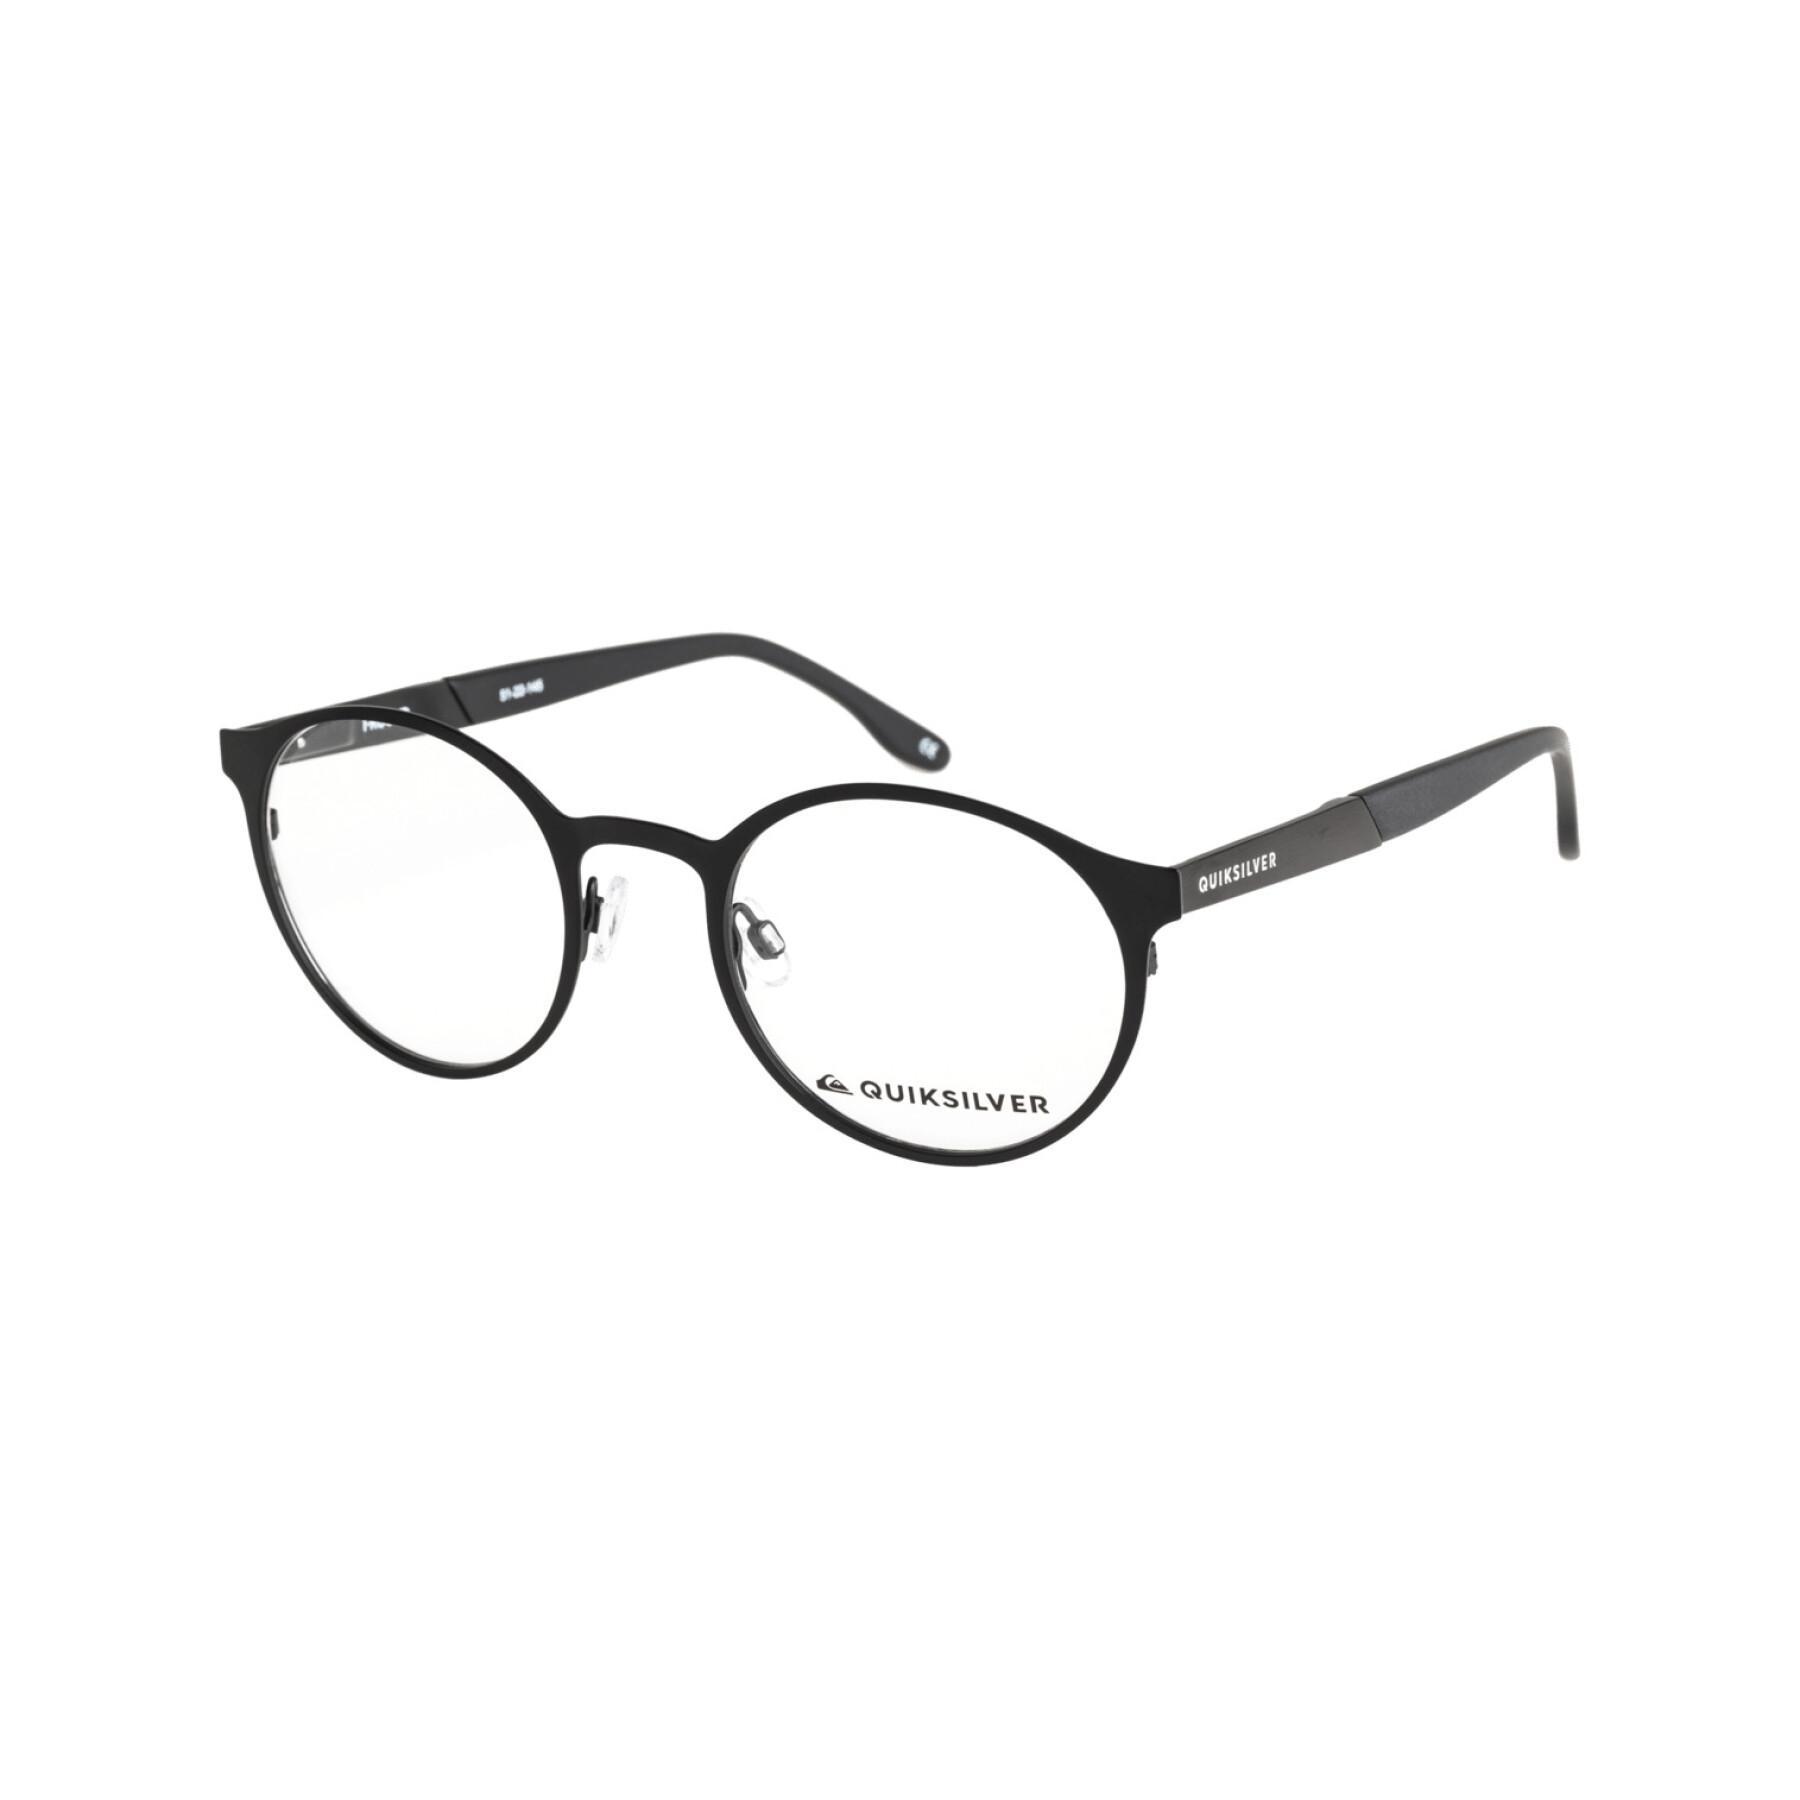 Accessories - Fashion I-Round Eyeglasses Accessories - Quiksilver